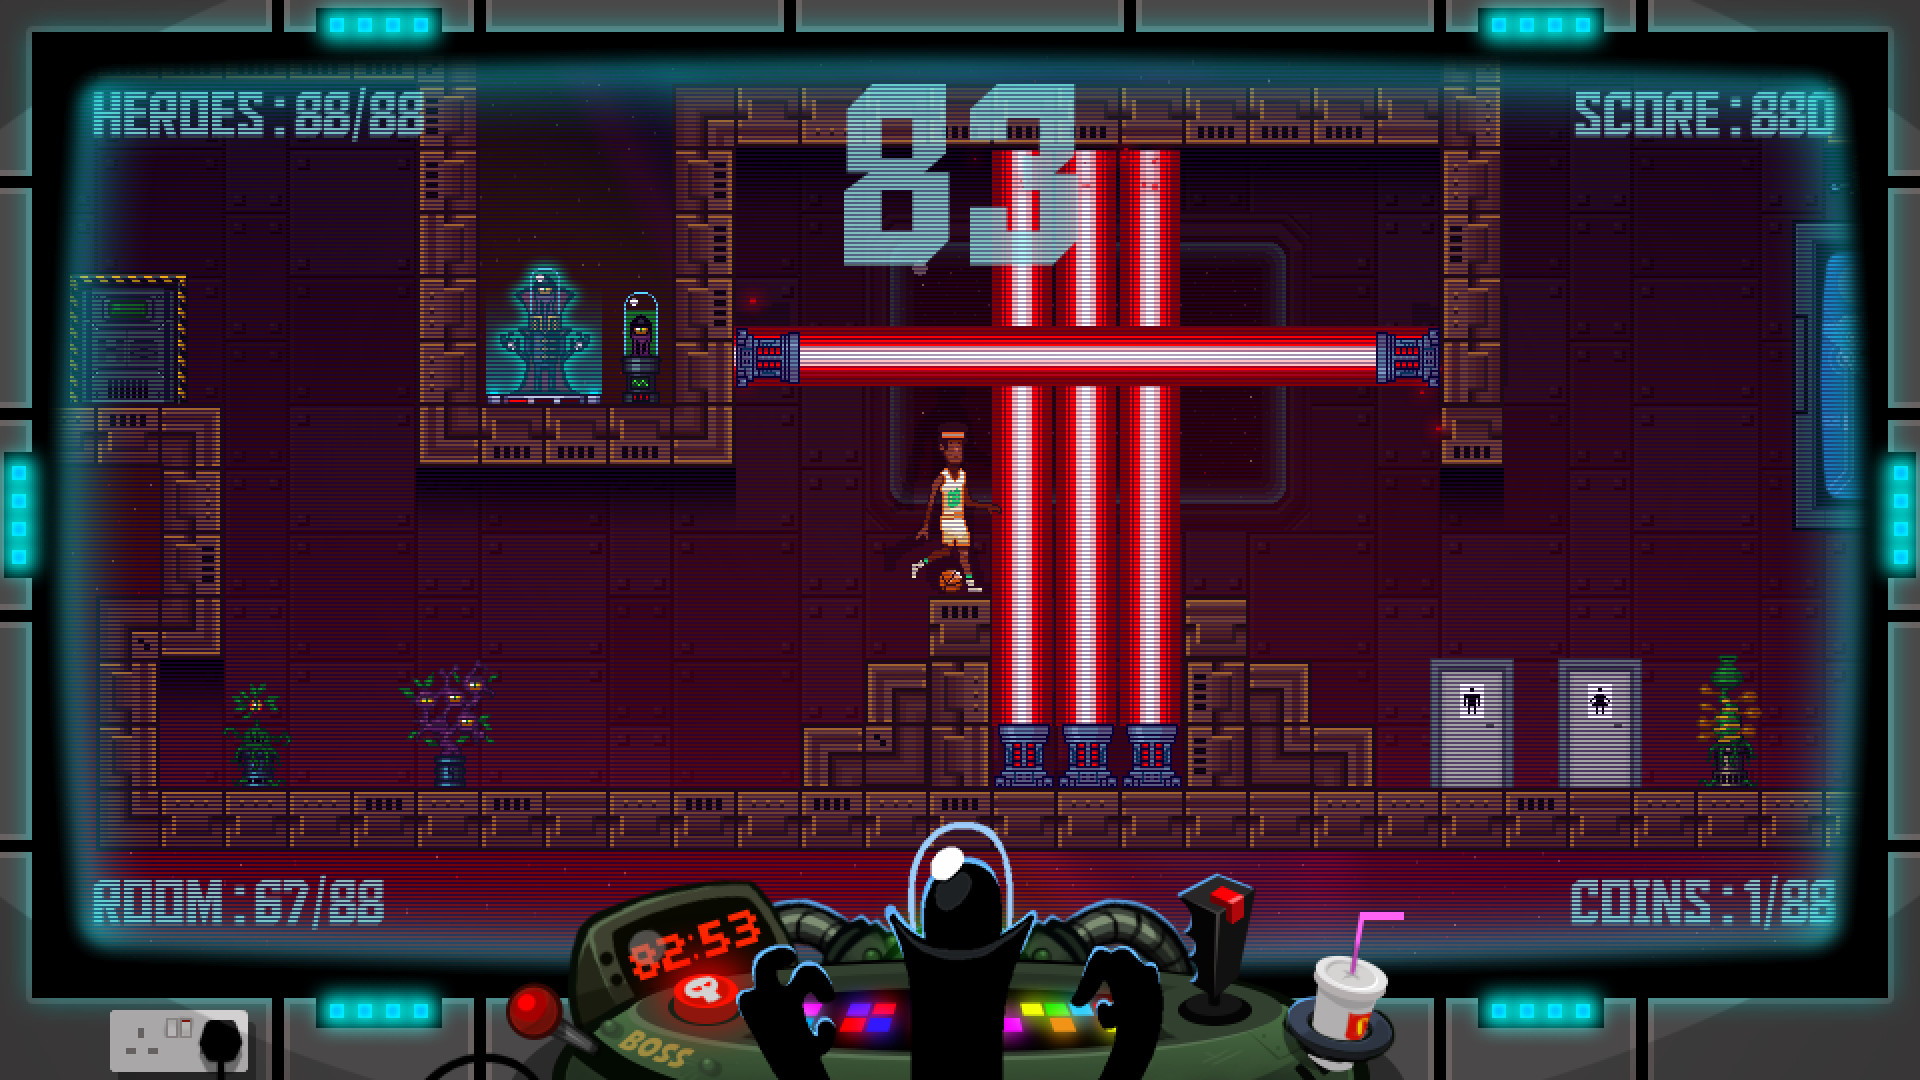 88 Heroes - screenshot 5